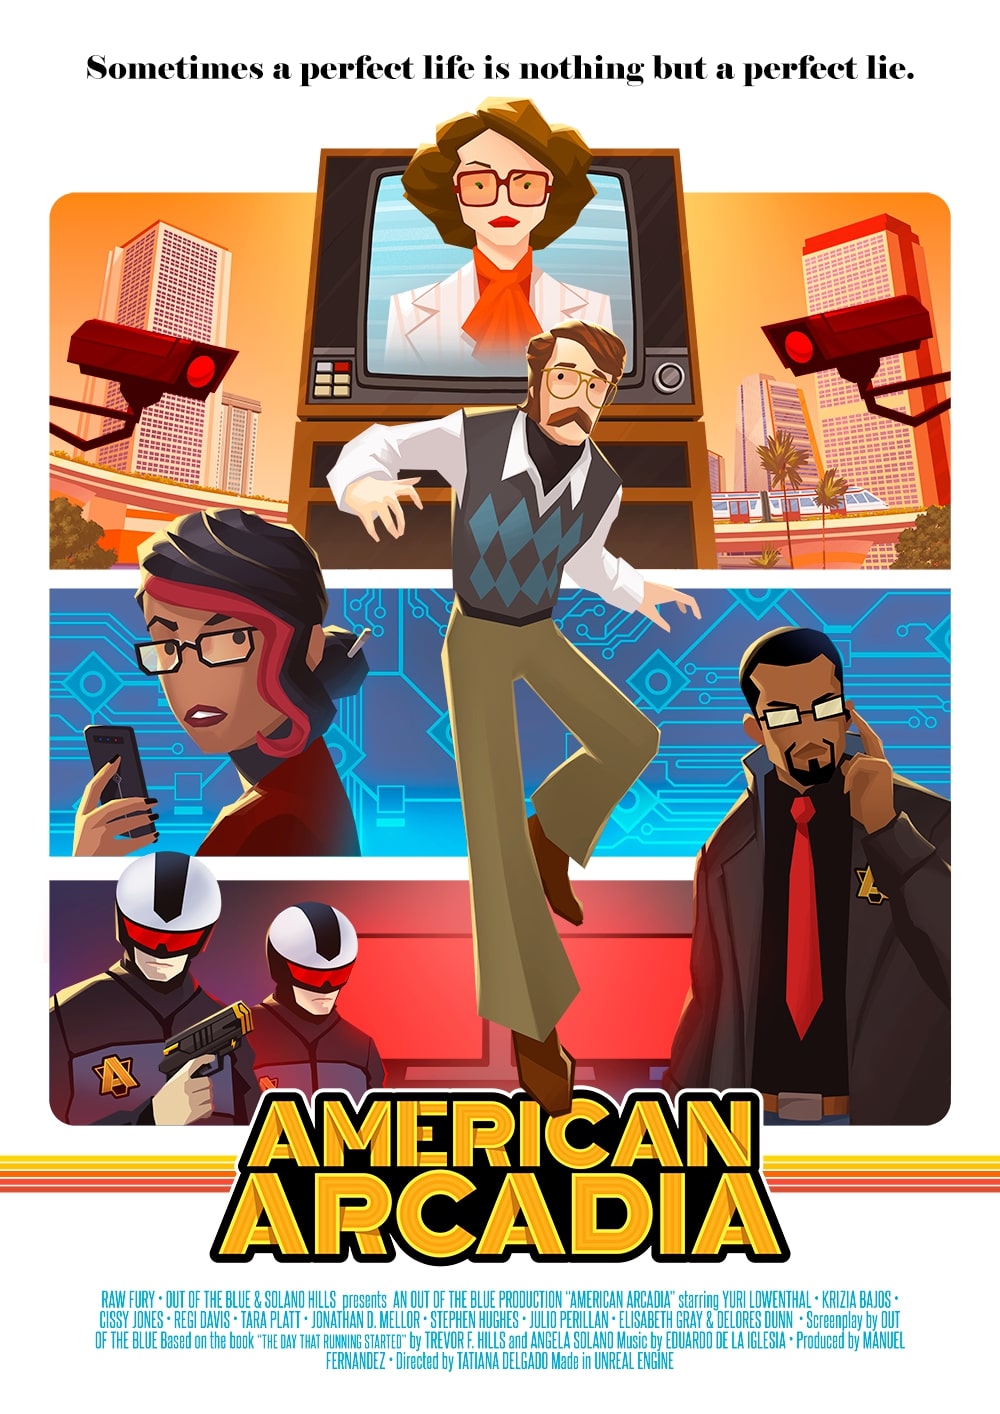 jaquette du jeu vidéo American Arcadia